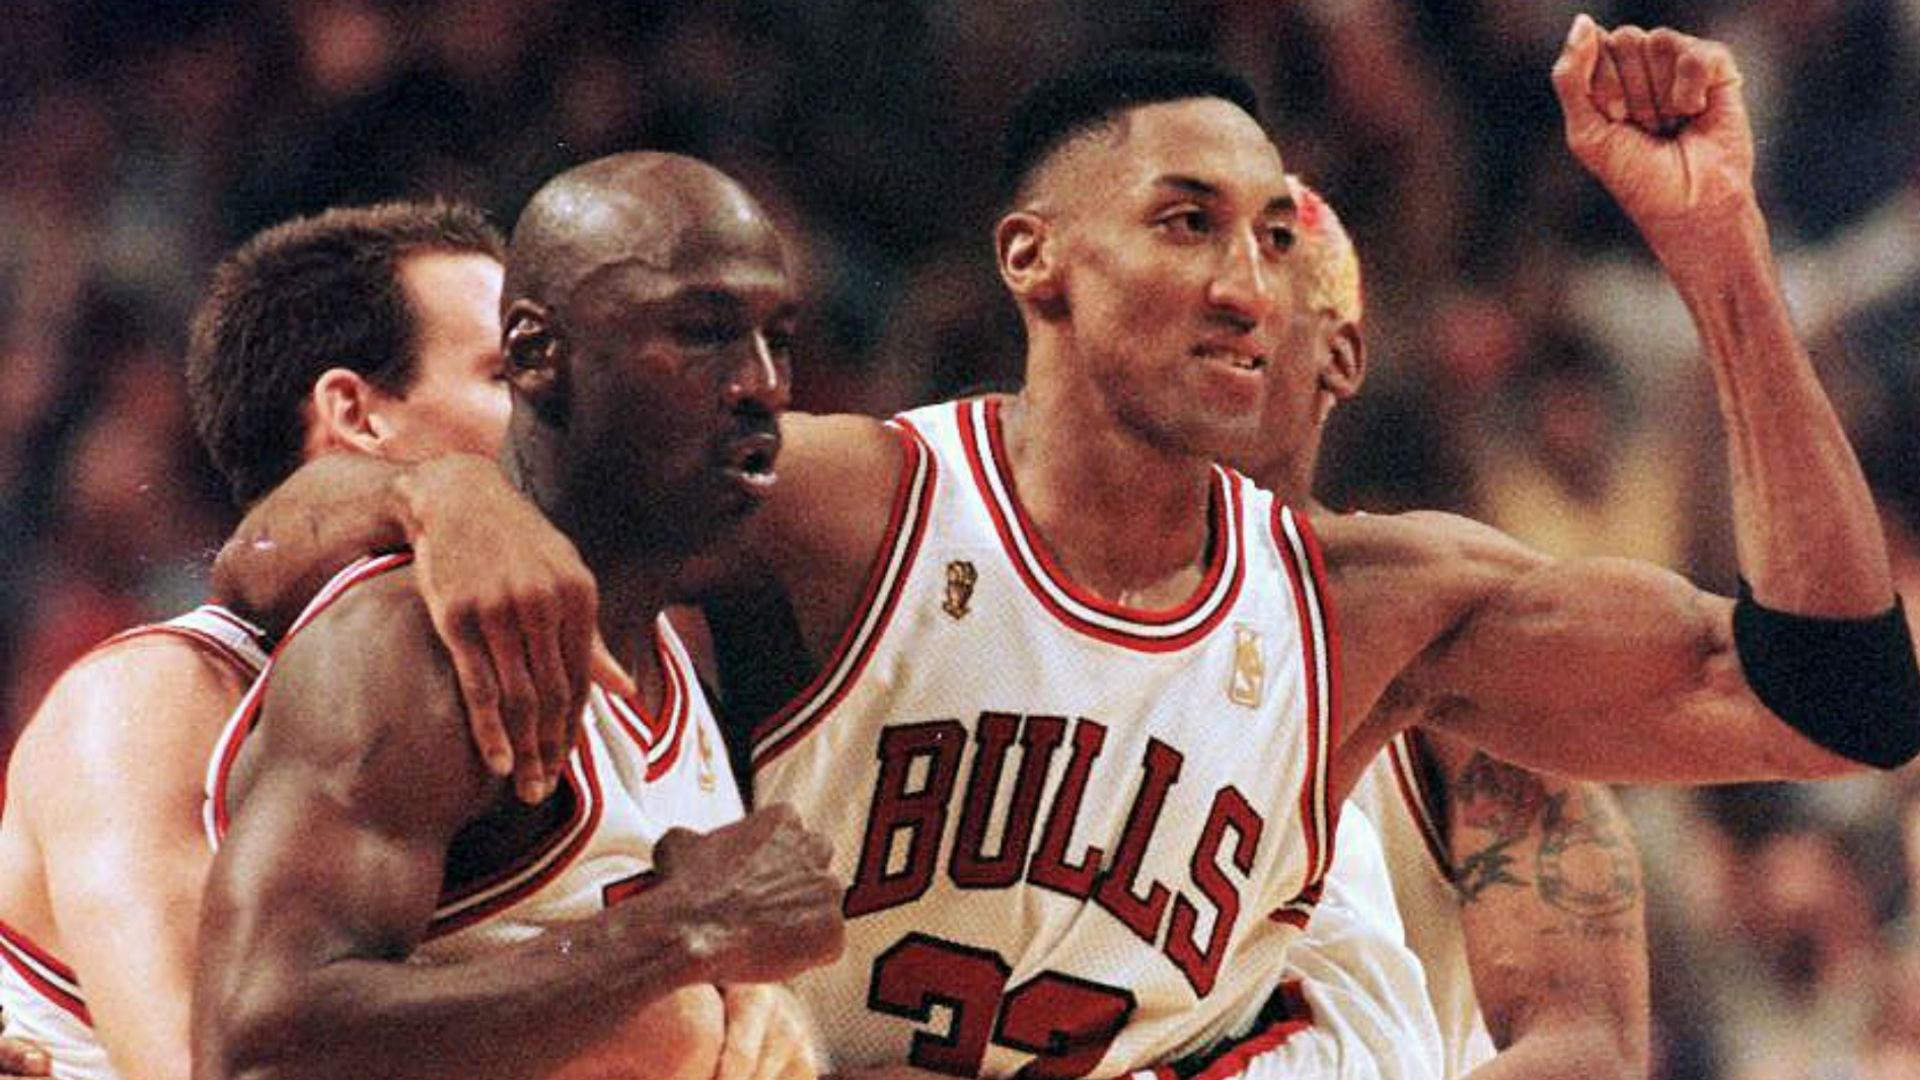 "Gotta Bail Michael Jordan Out": Steve Kerr's Unforgettable Game-Winner and MJ's Iconic 1997 Championship Performance